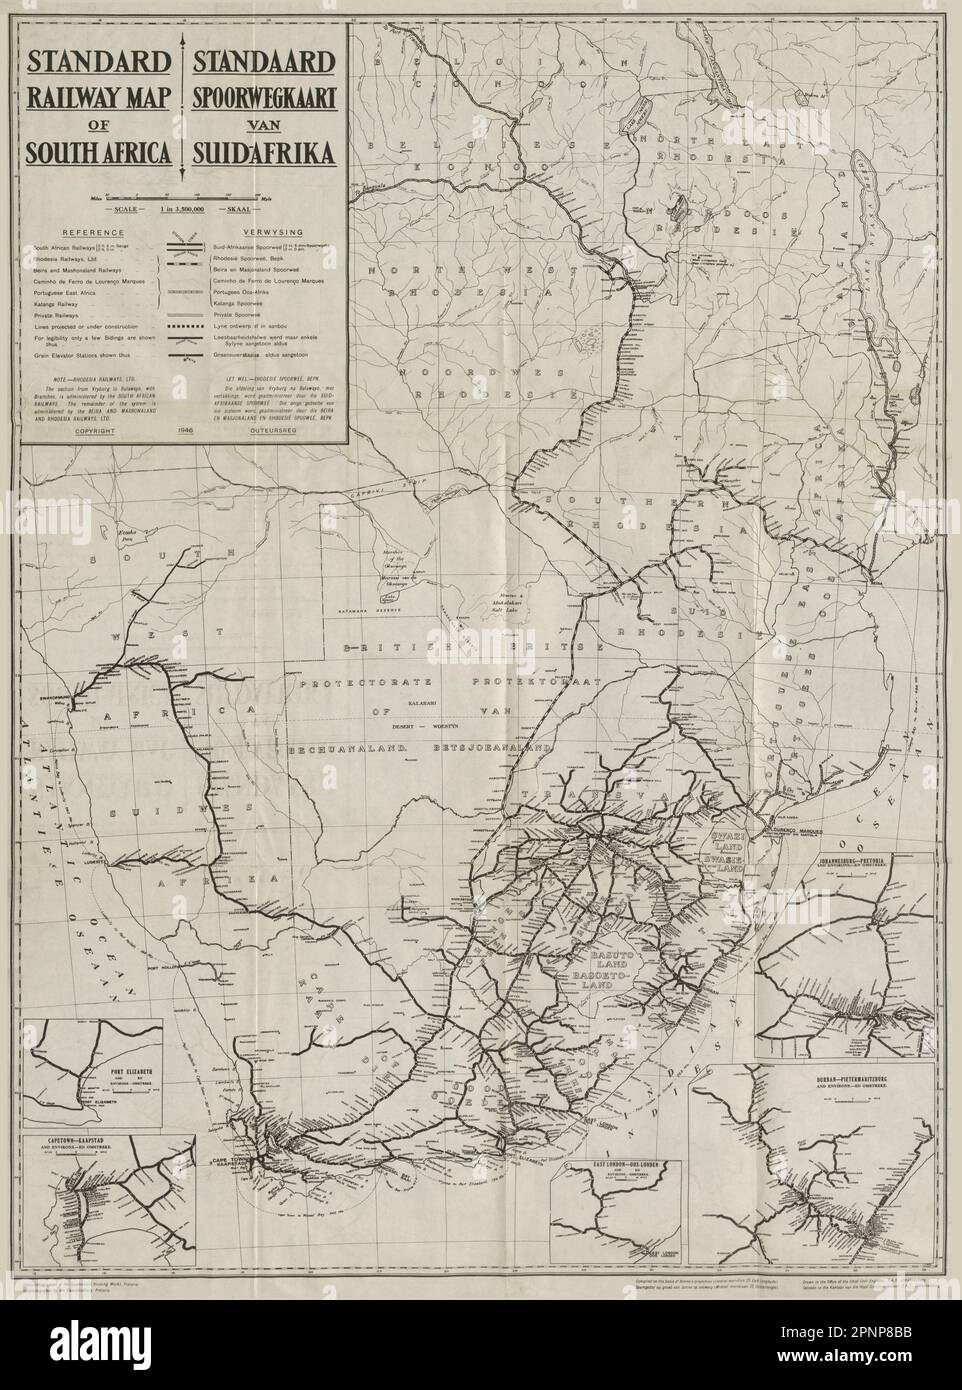 Südafrikanische Standardbahn-Karte. Suid-Afrika Standaard Spoorwegkaart 1946 Stockfoto